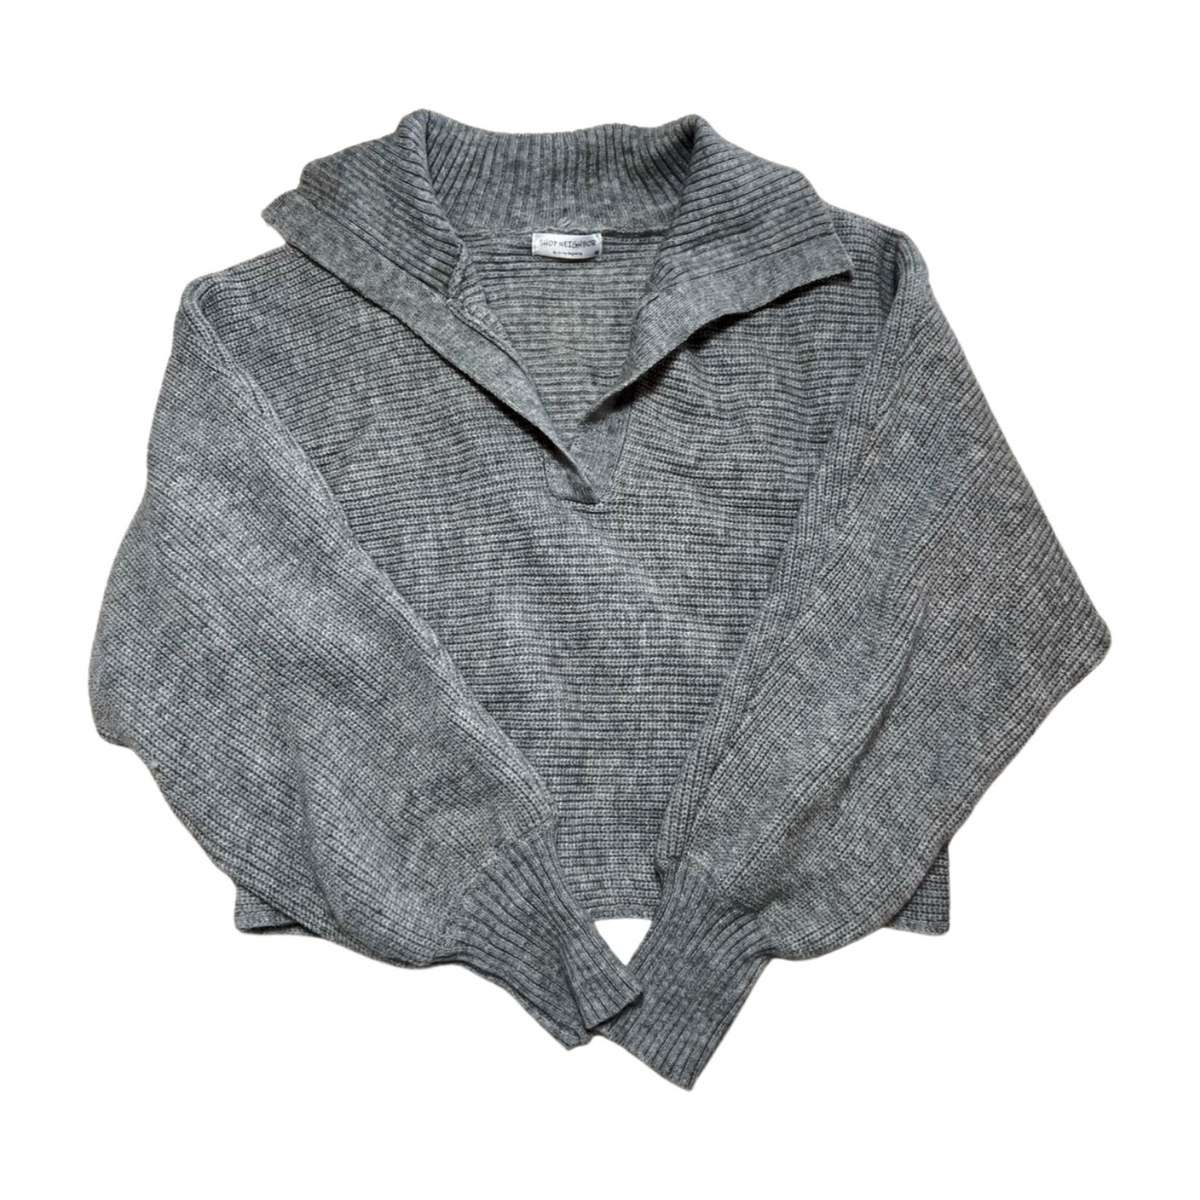 Shop Neighbor- Grey Knit Collared Sweater